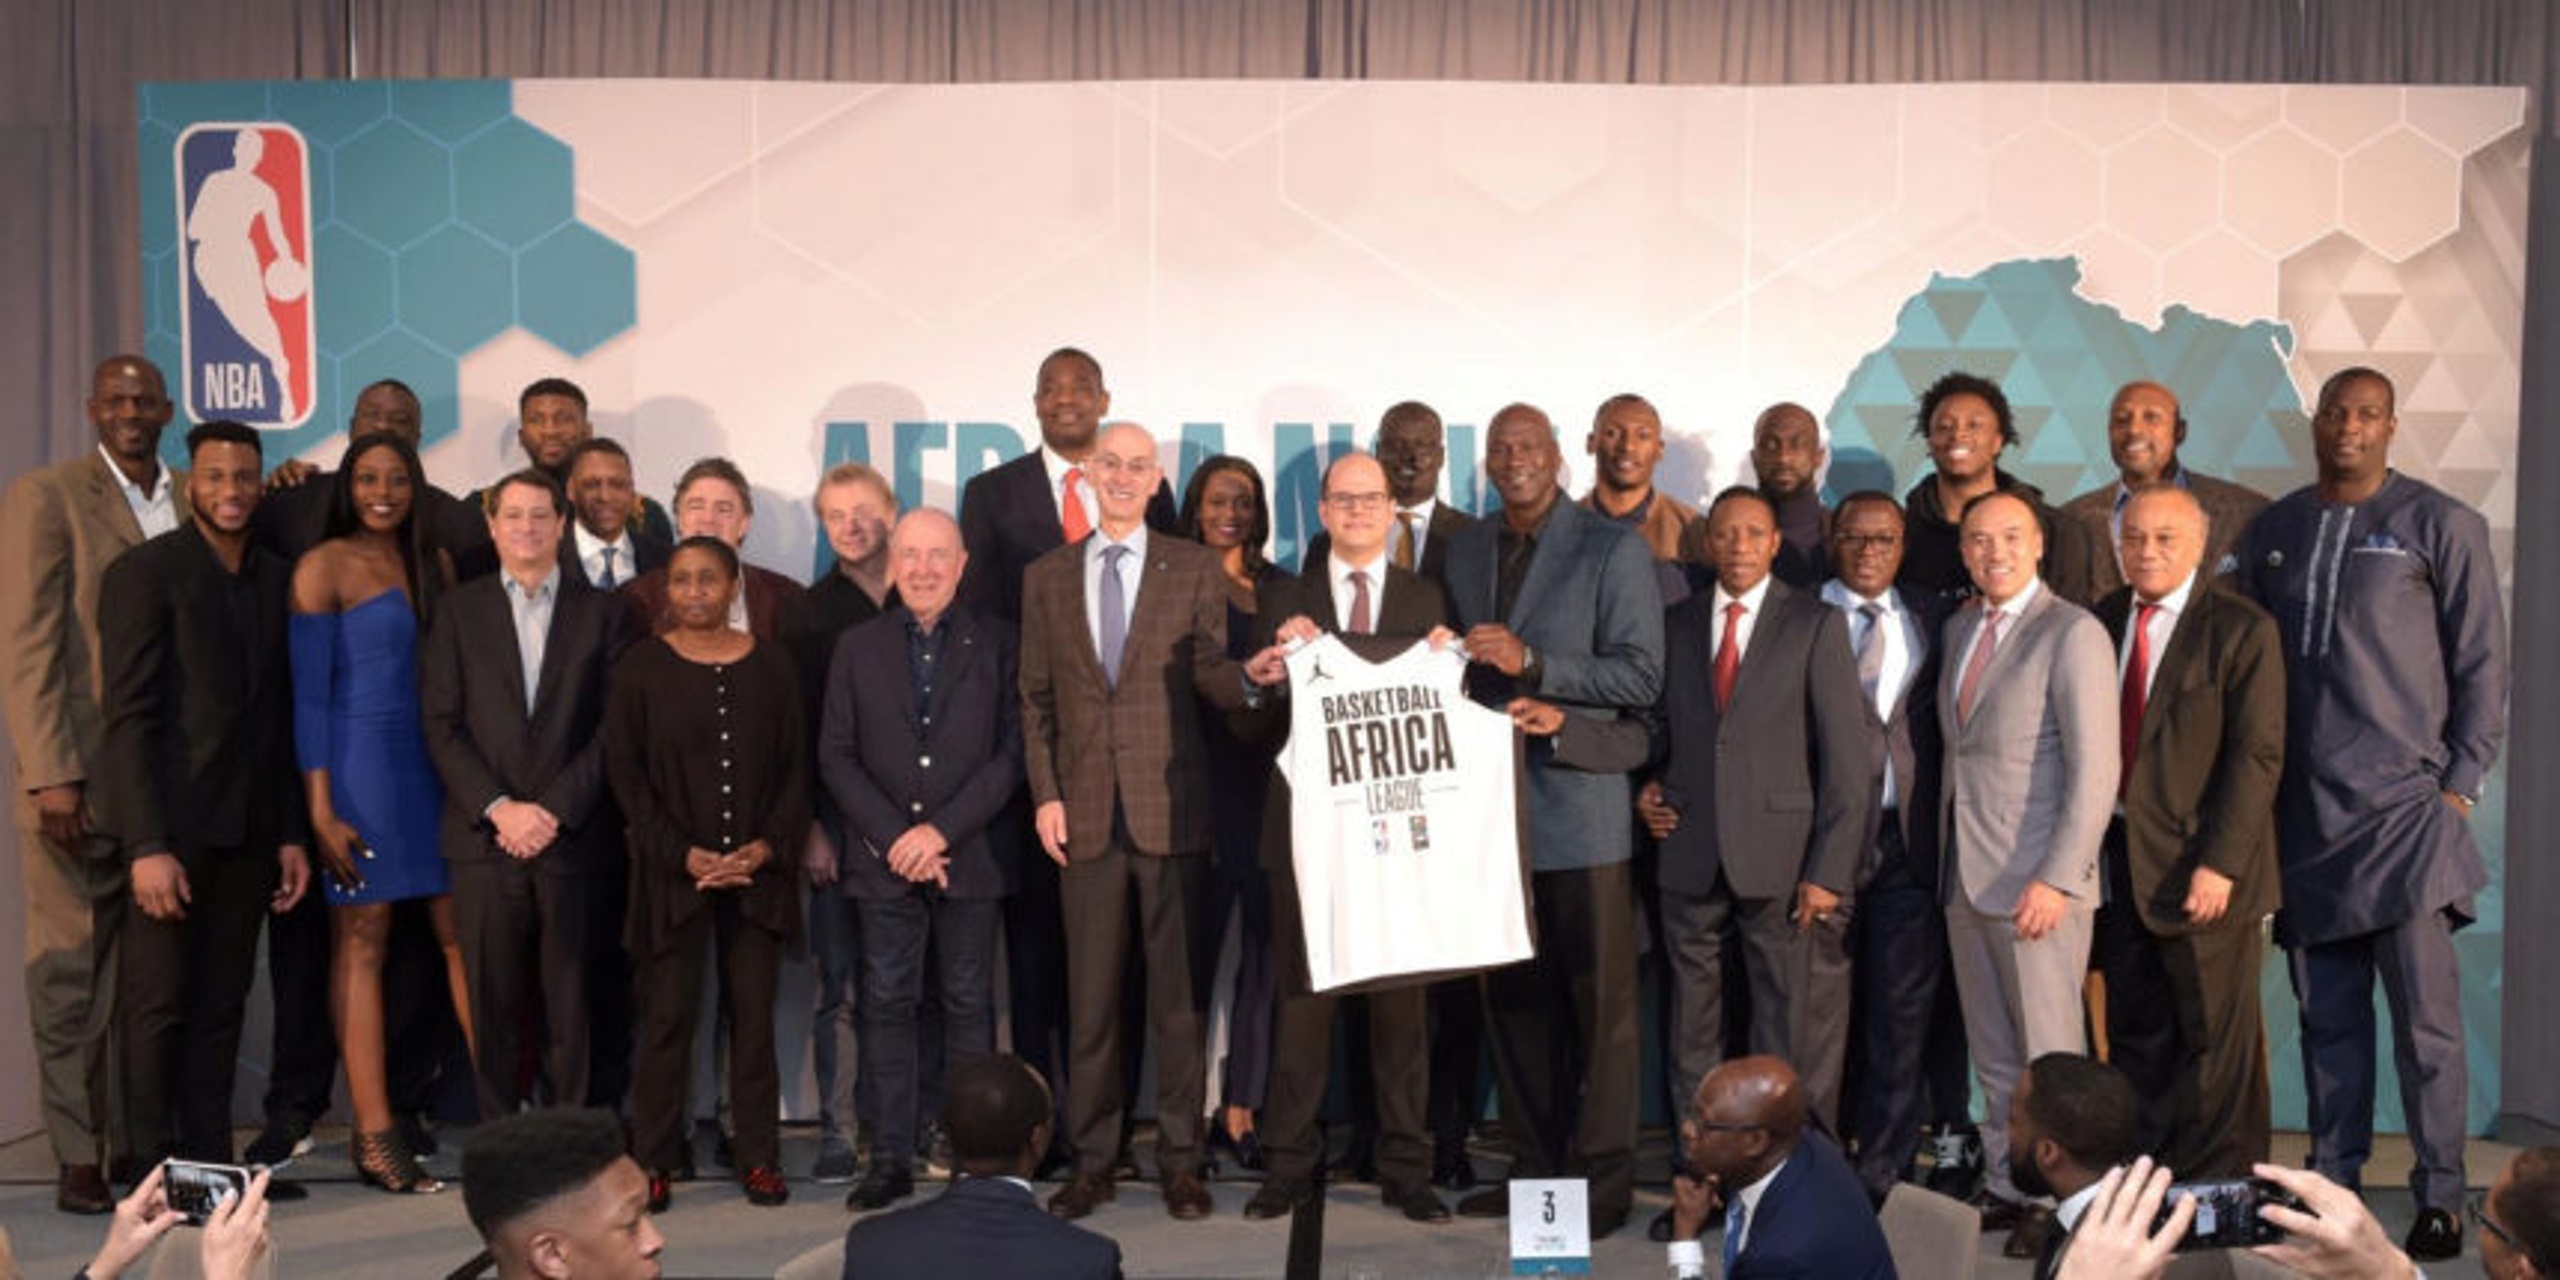 Basketball Africa League could be Euroleague, China alternative